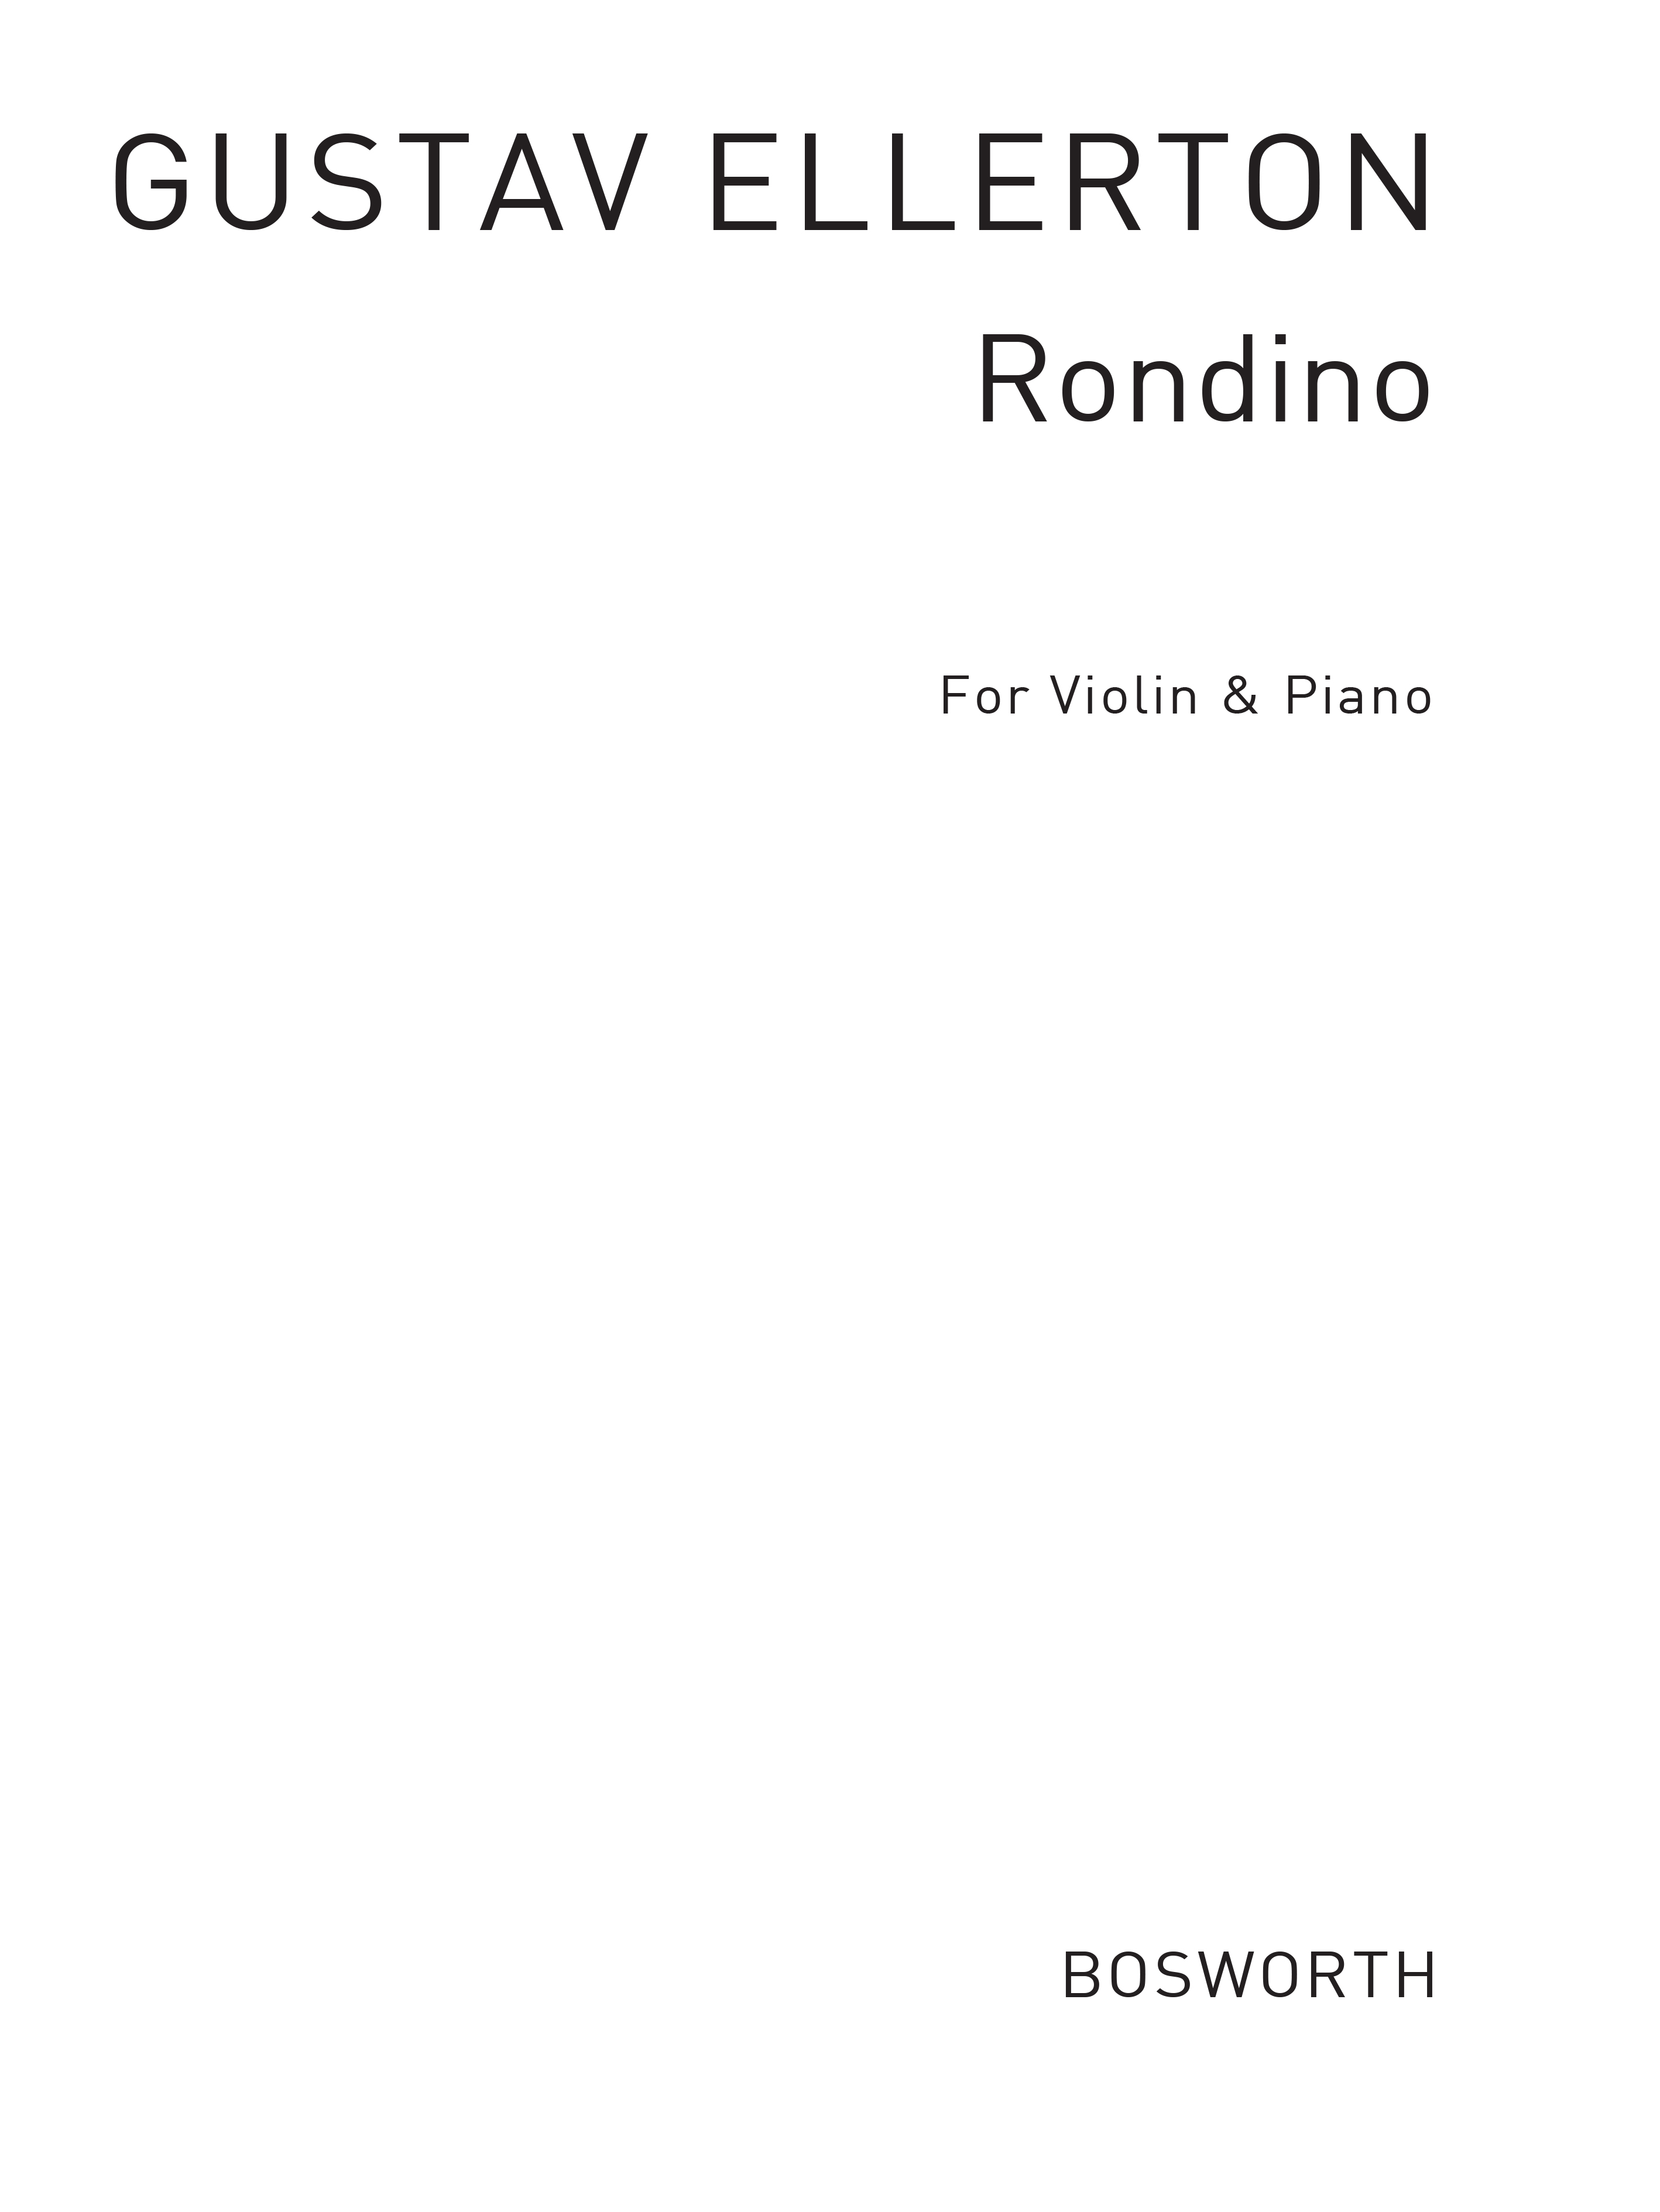 Gustav Ellerton: Rondino For Violin And Piano Op.18 No.4: Violin: Instrumental